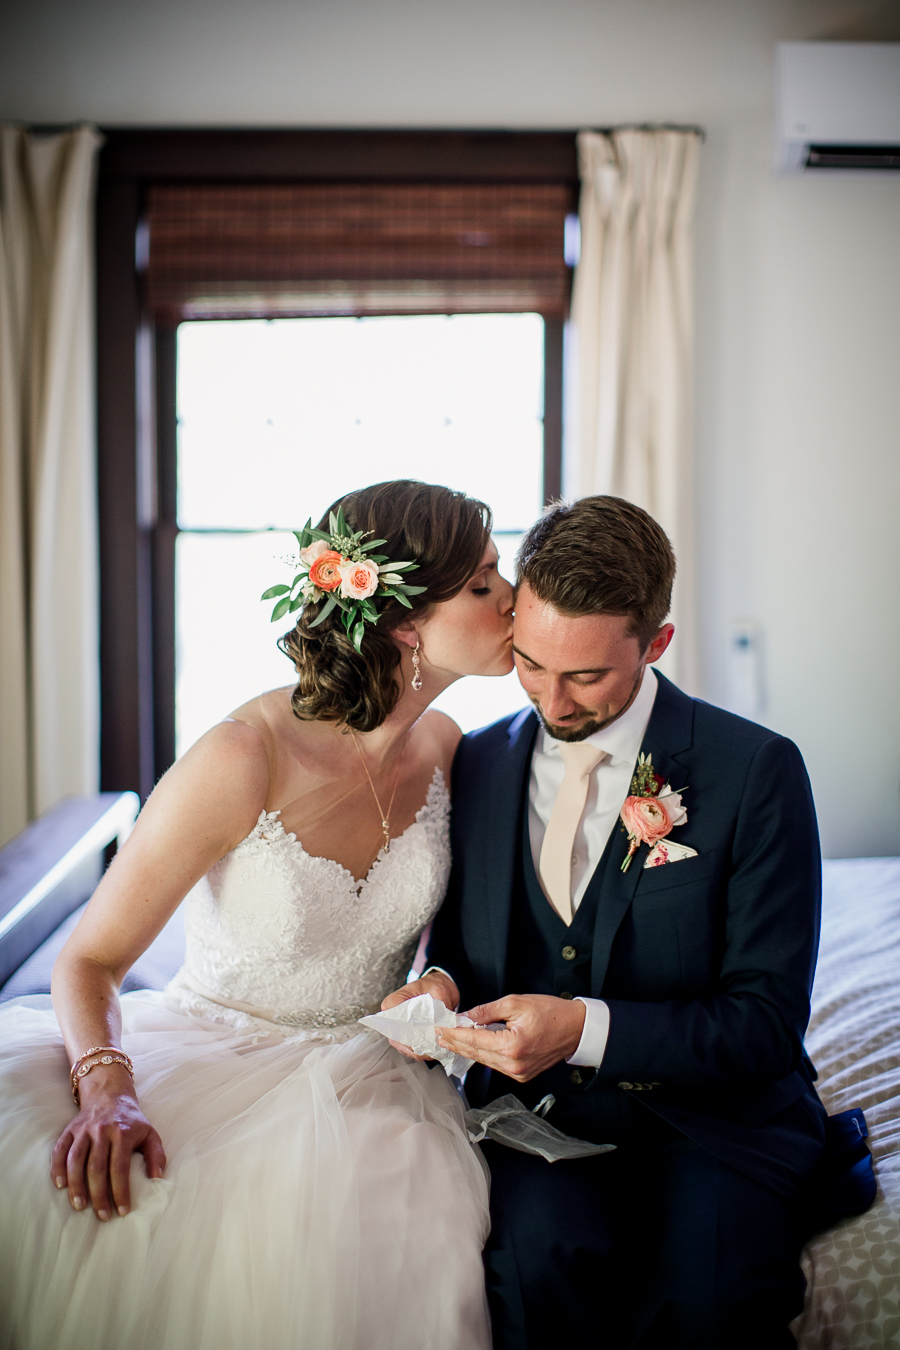 Kissing the Groom at this North Carolina Elopement by Knoxville Wedding Photographer, Amanda May Photos.